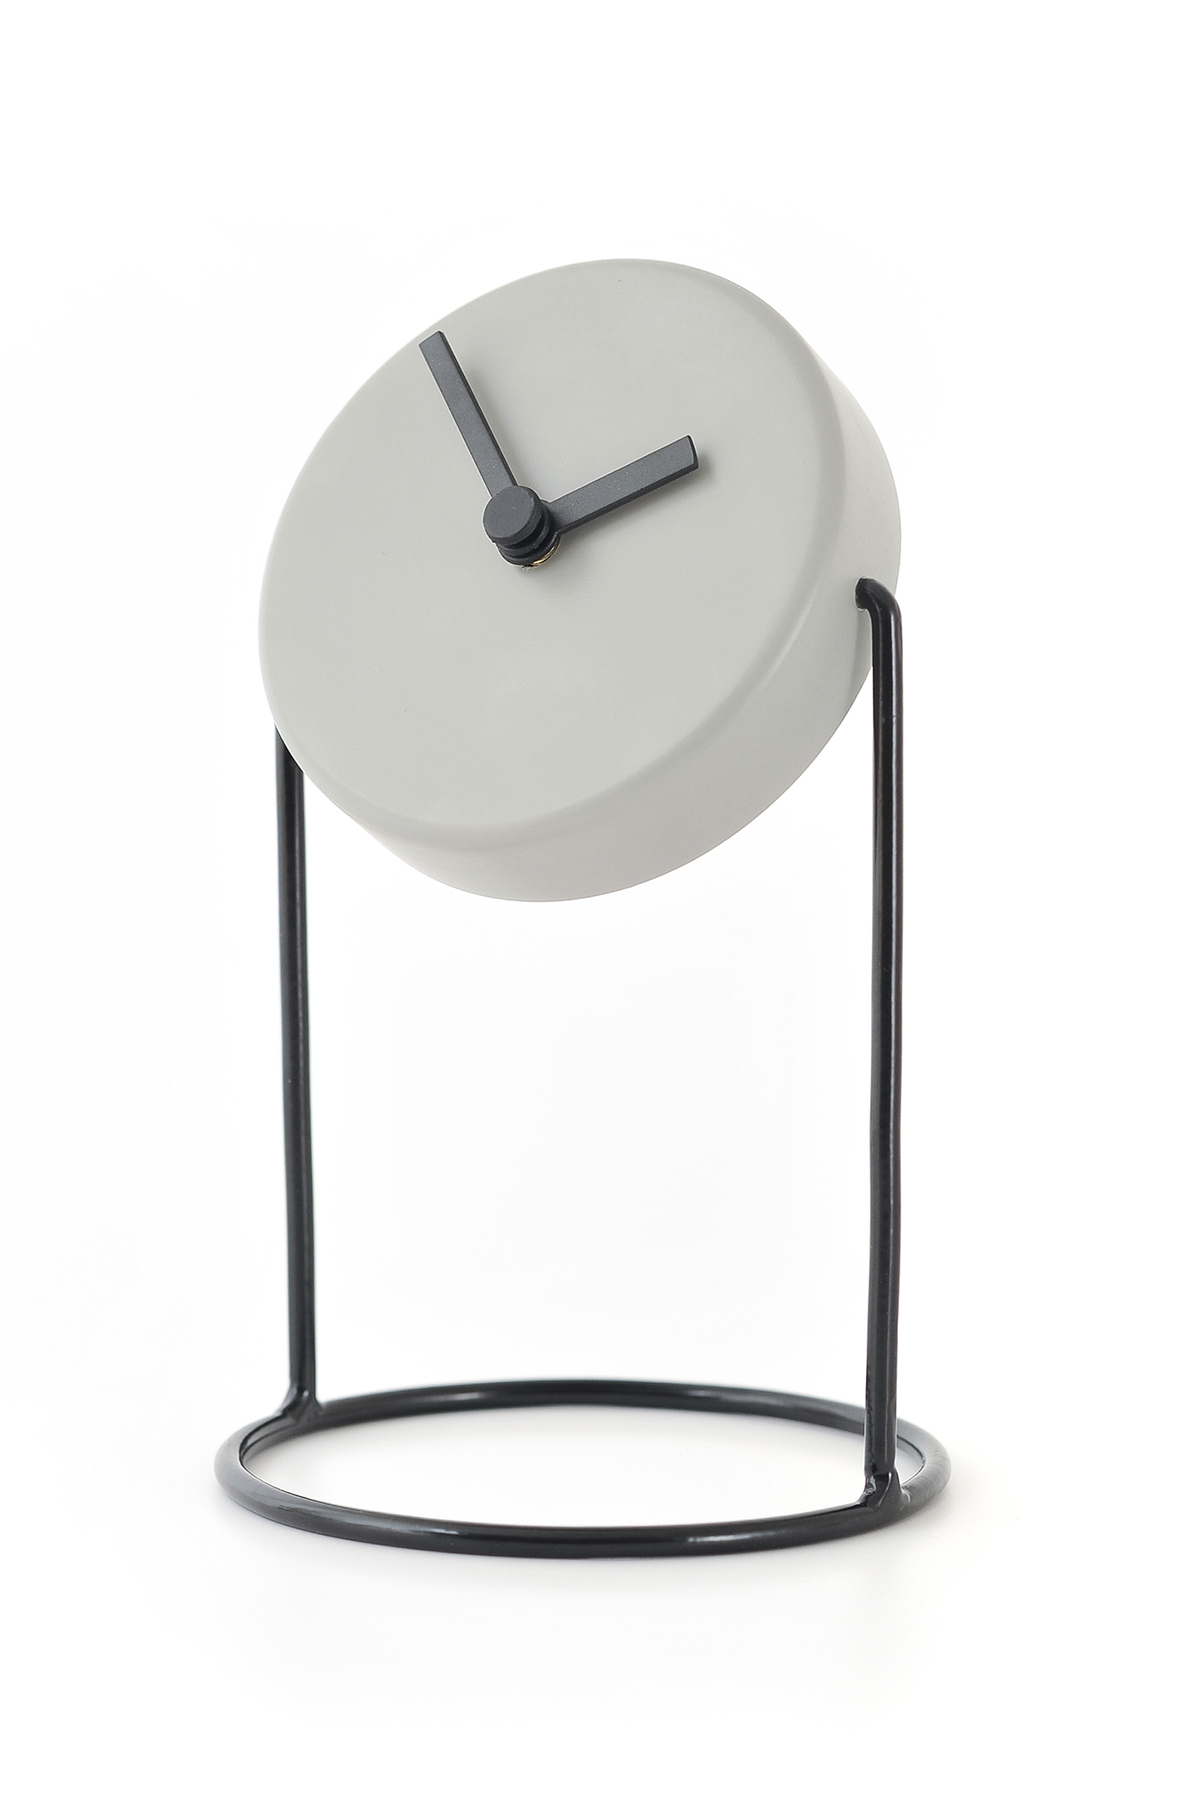 clock HomeAccesories reloj roble aok wood home